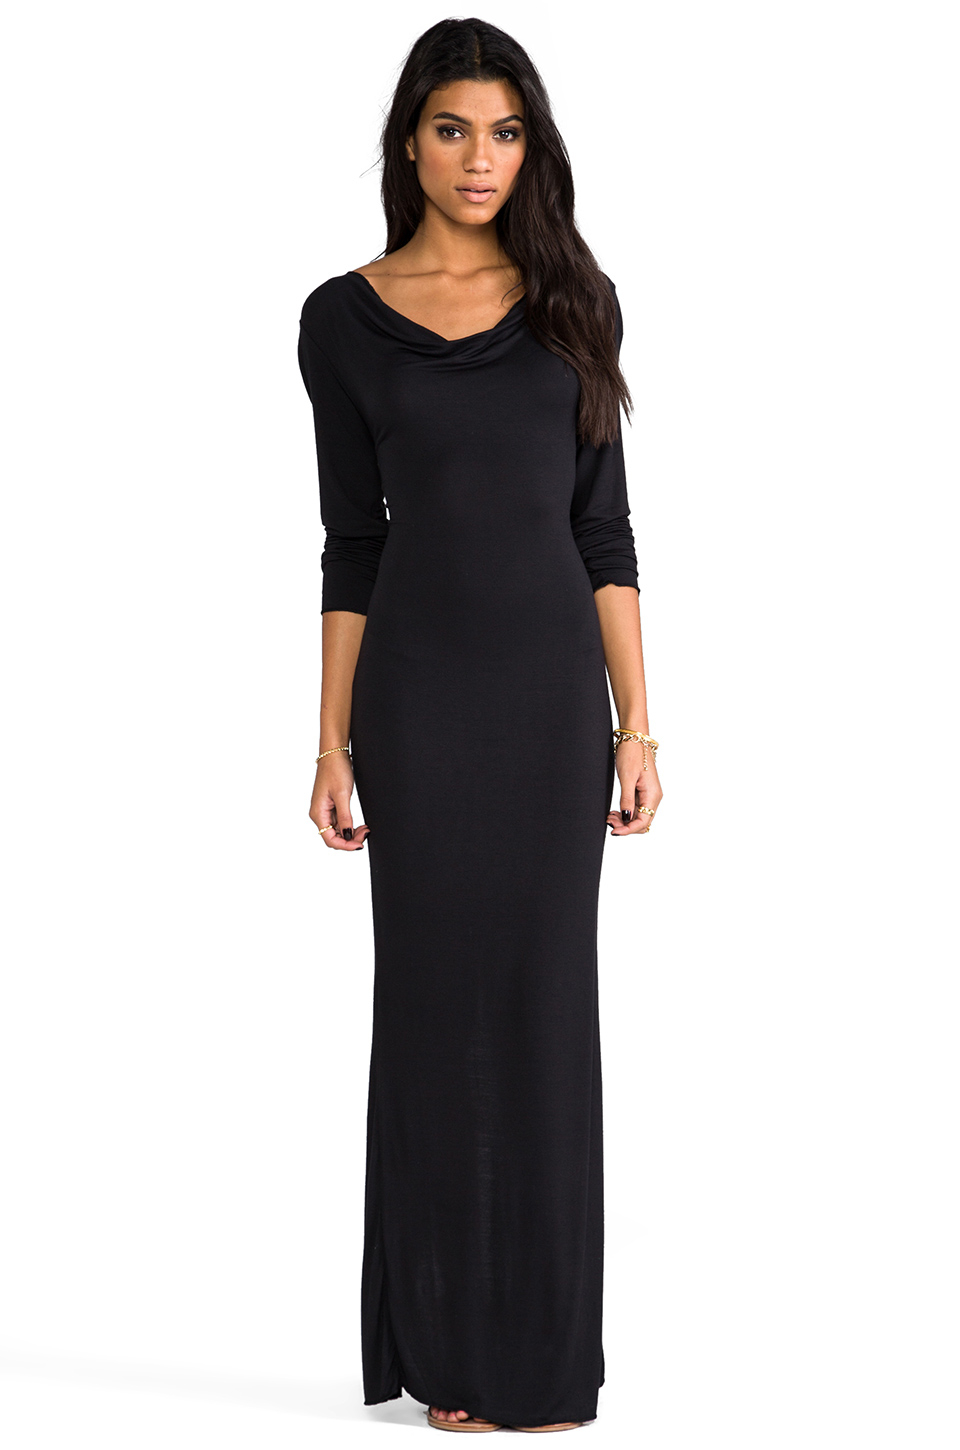 Lyst - Indah Santee Stretch-Jersey Maxi Dress in Black